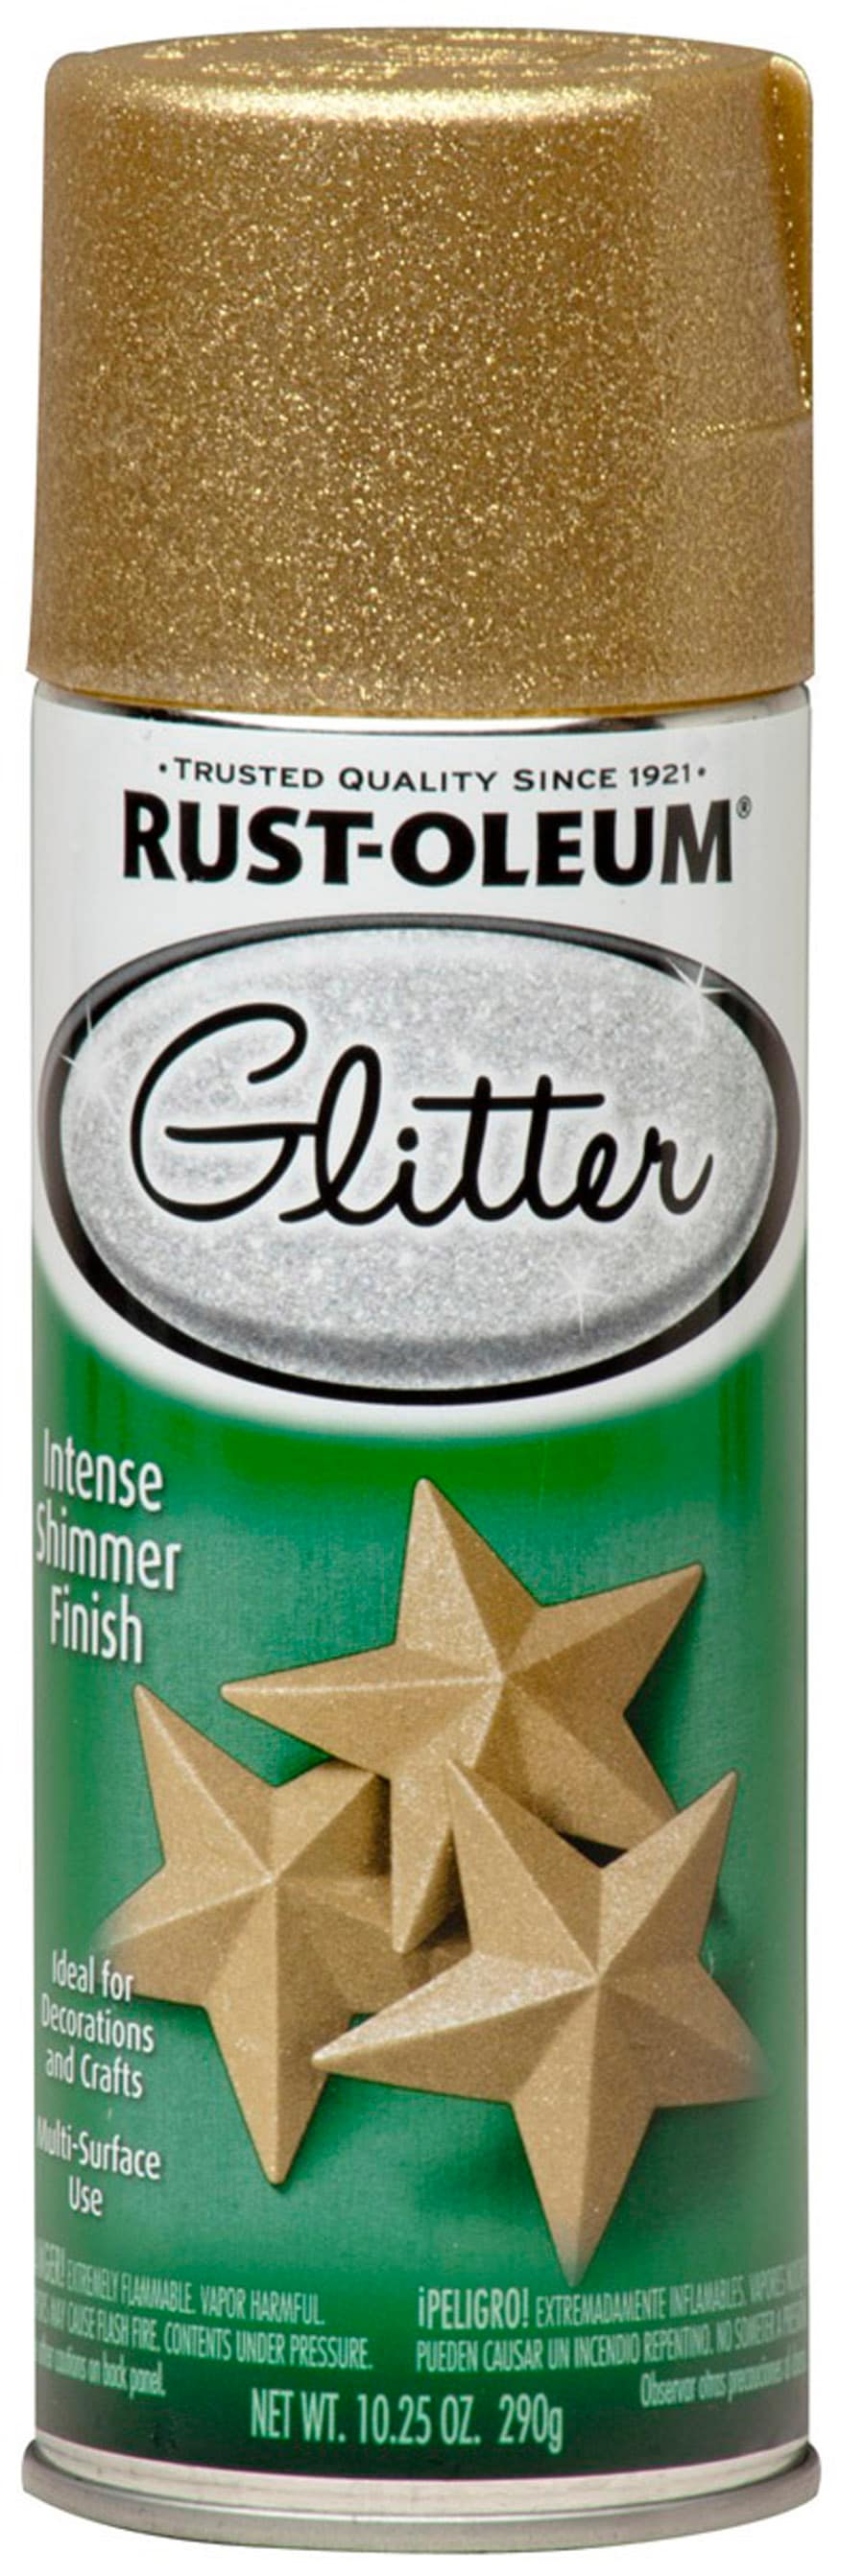 Glitter Paint at